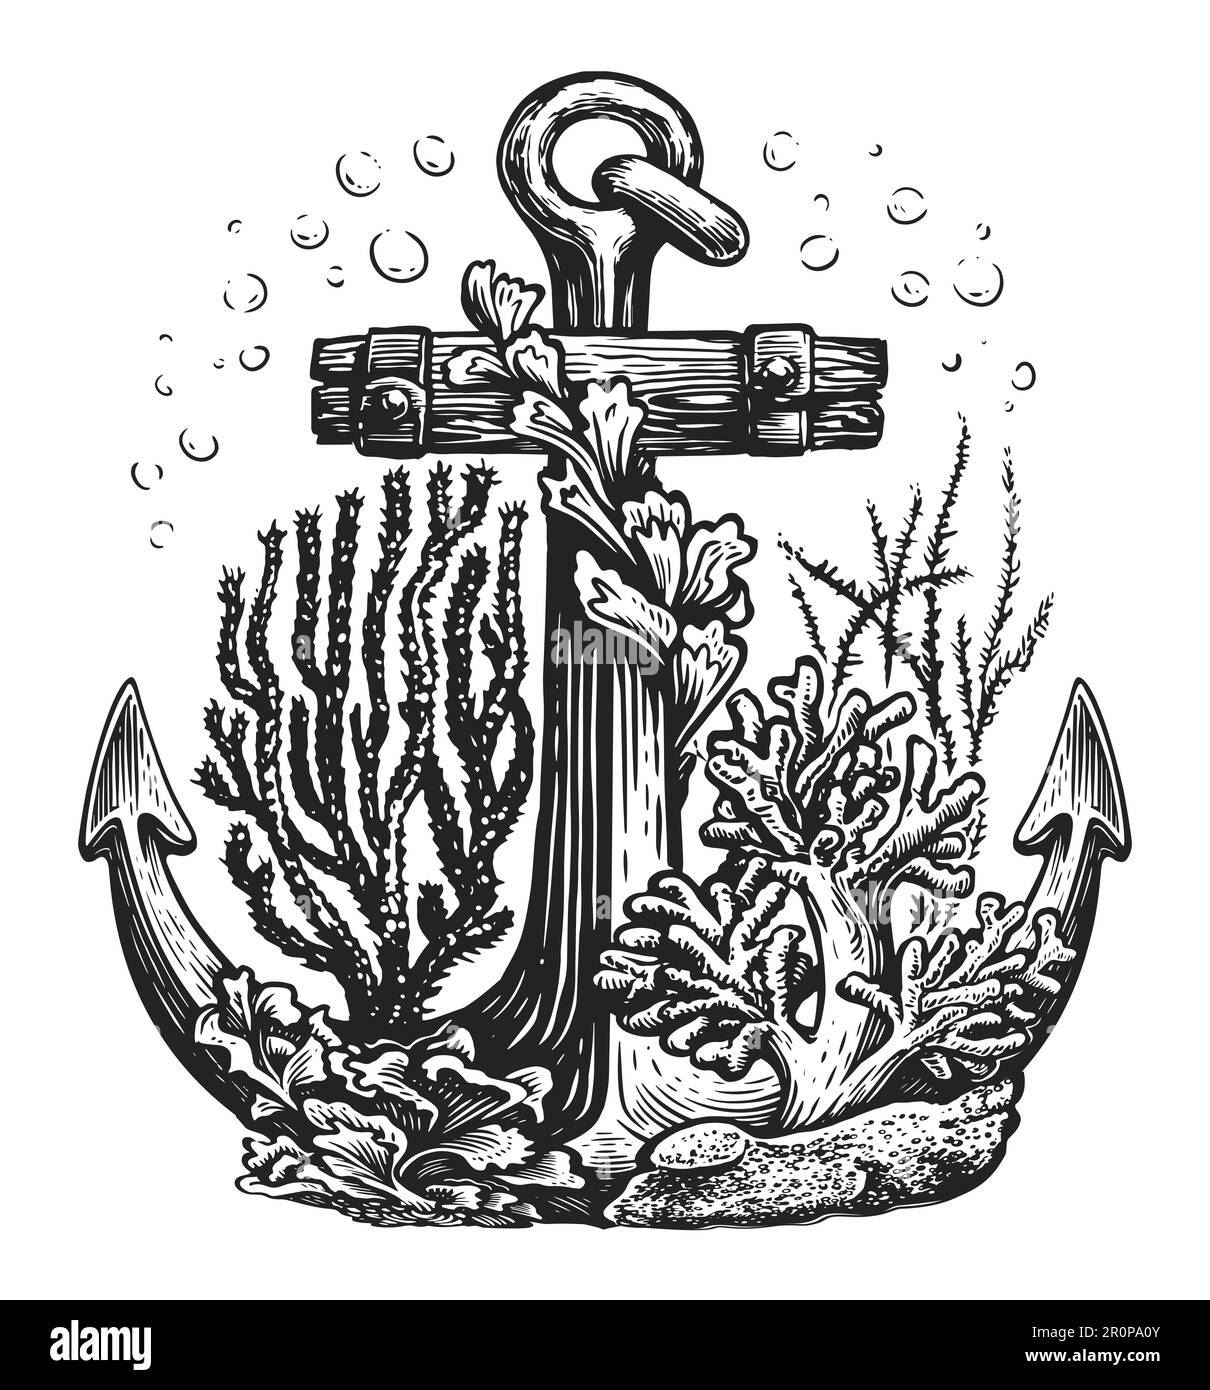 Old anchor sketch. Vintage illustration. Marine concept Stock Photo